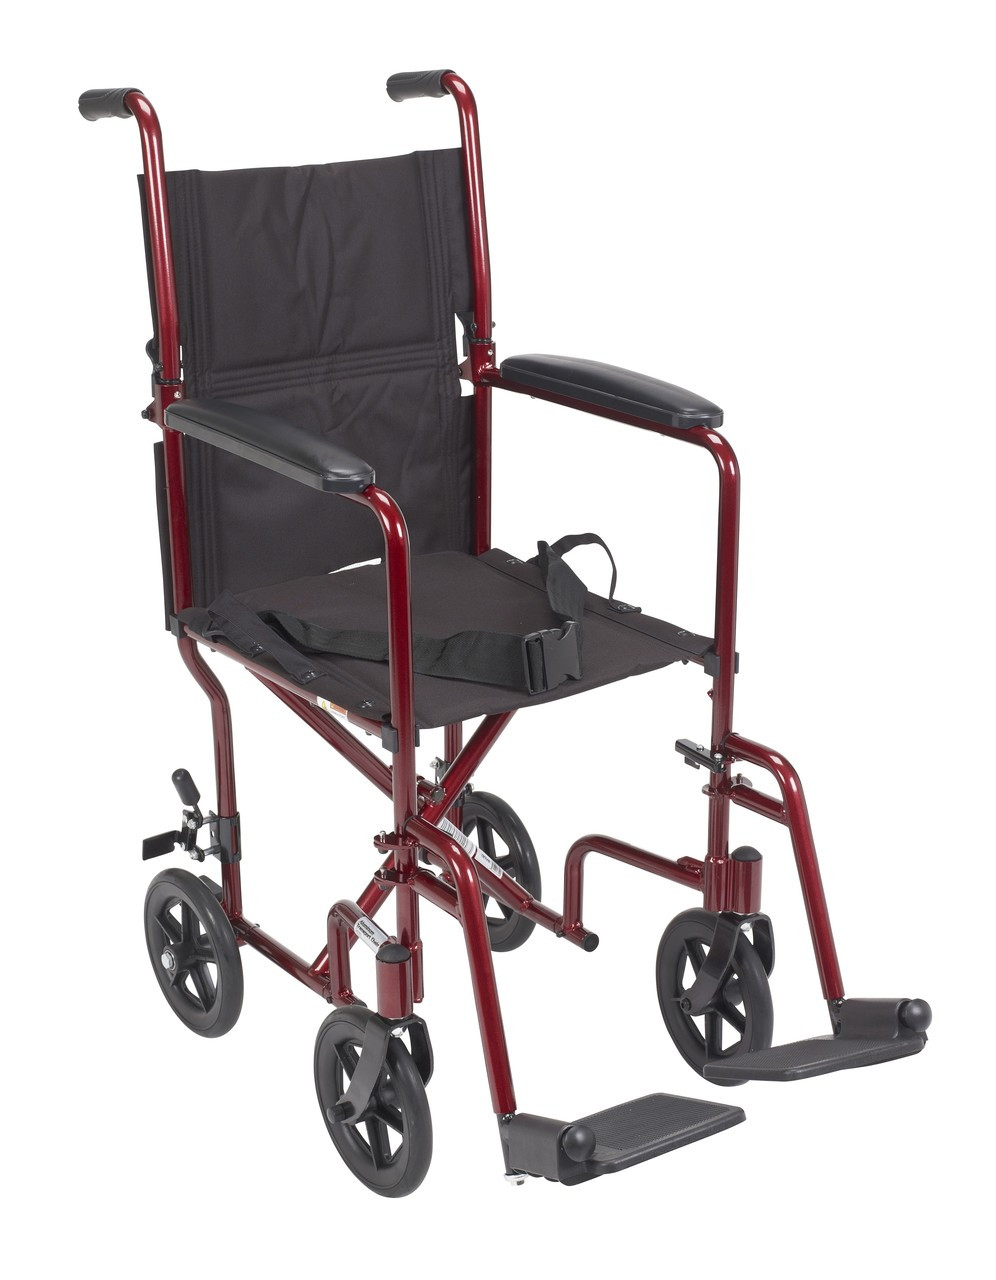 Drive ATC19-RD Lightweight Transport Wheelchair, 19" Seat, Red (ATC19-RD)